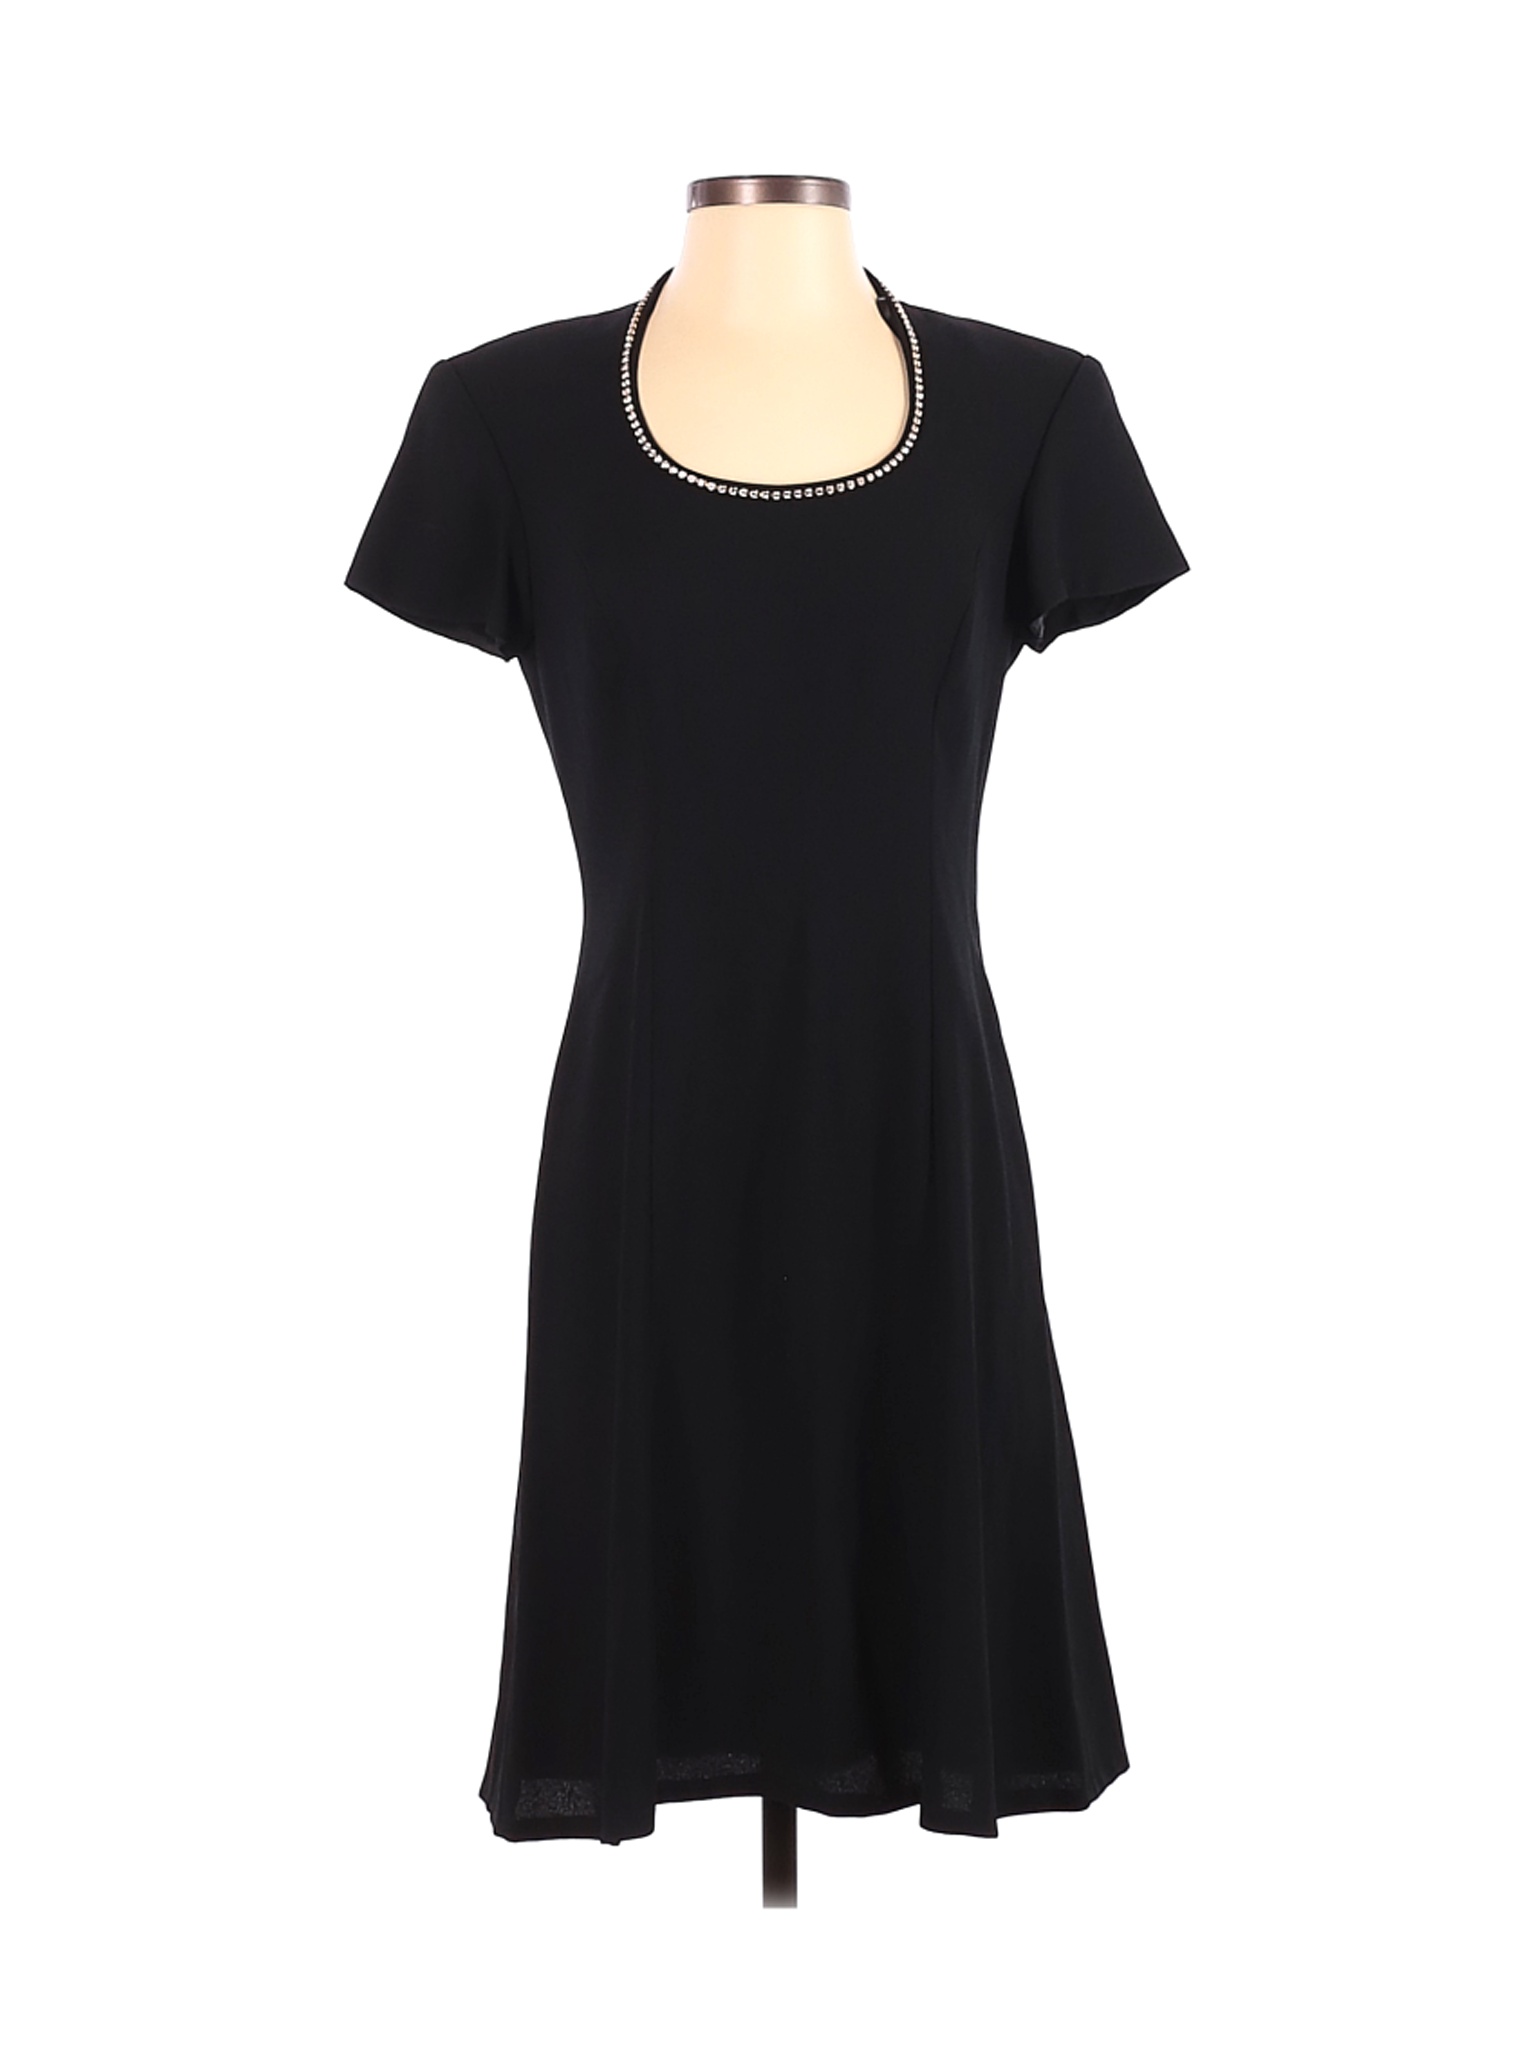 Liz Claiborne Women Black Cocktail Dress 4 Ebay 